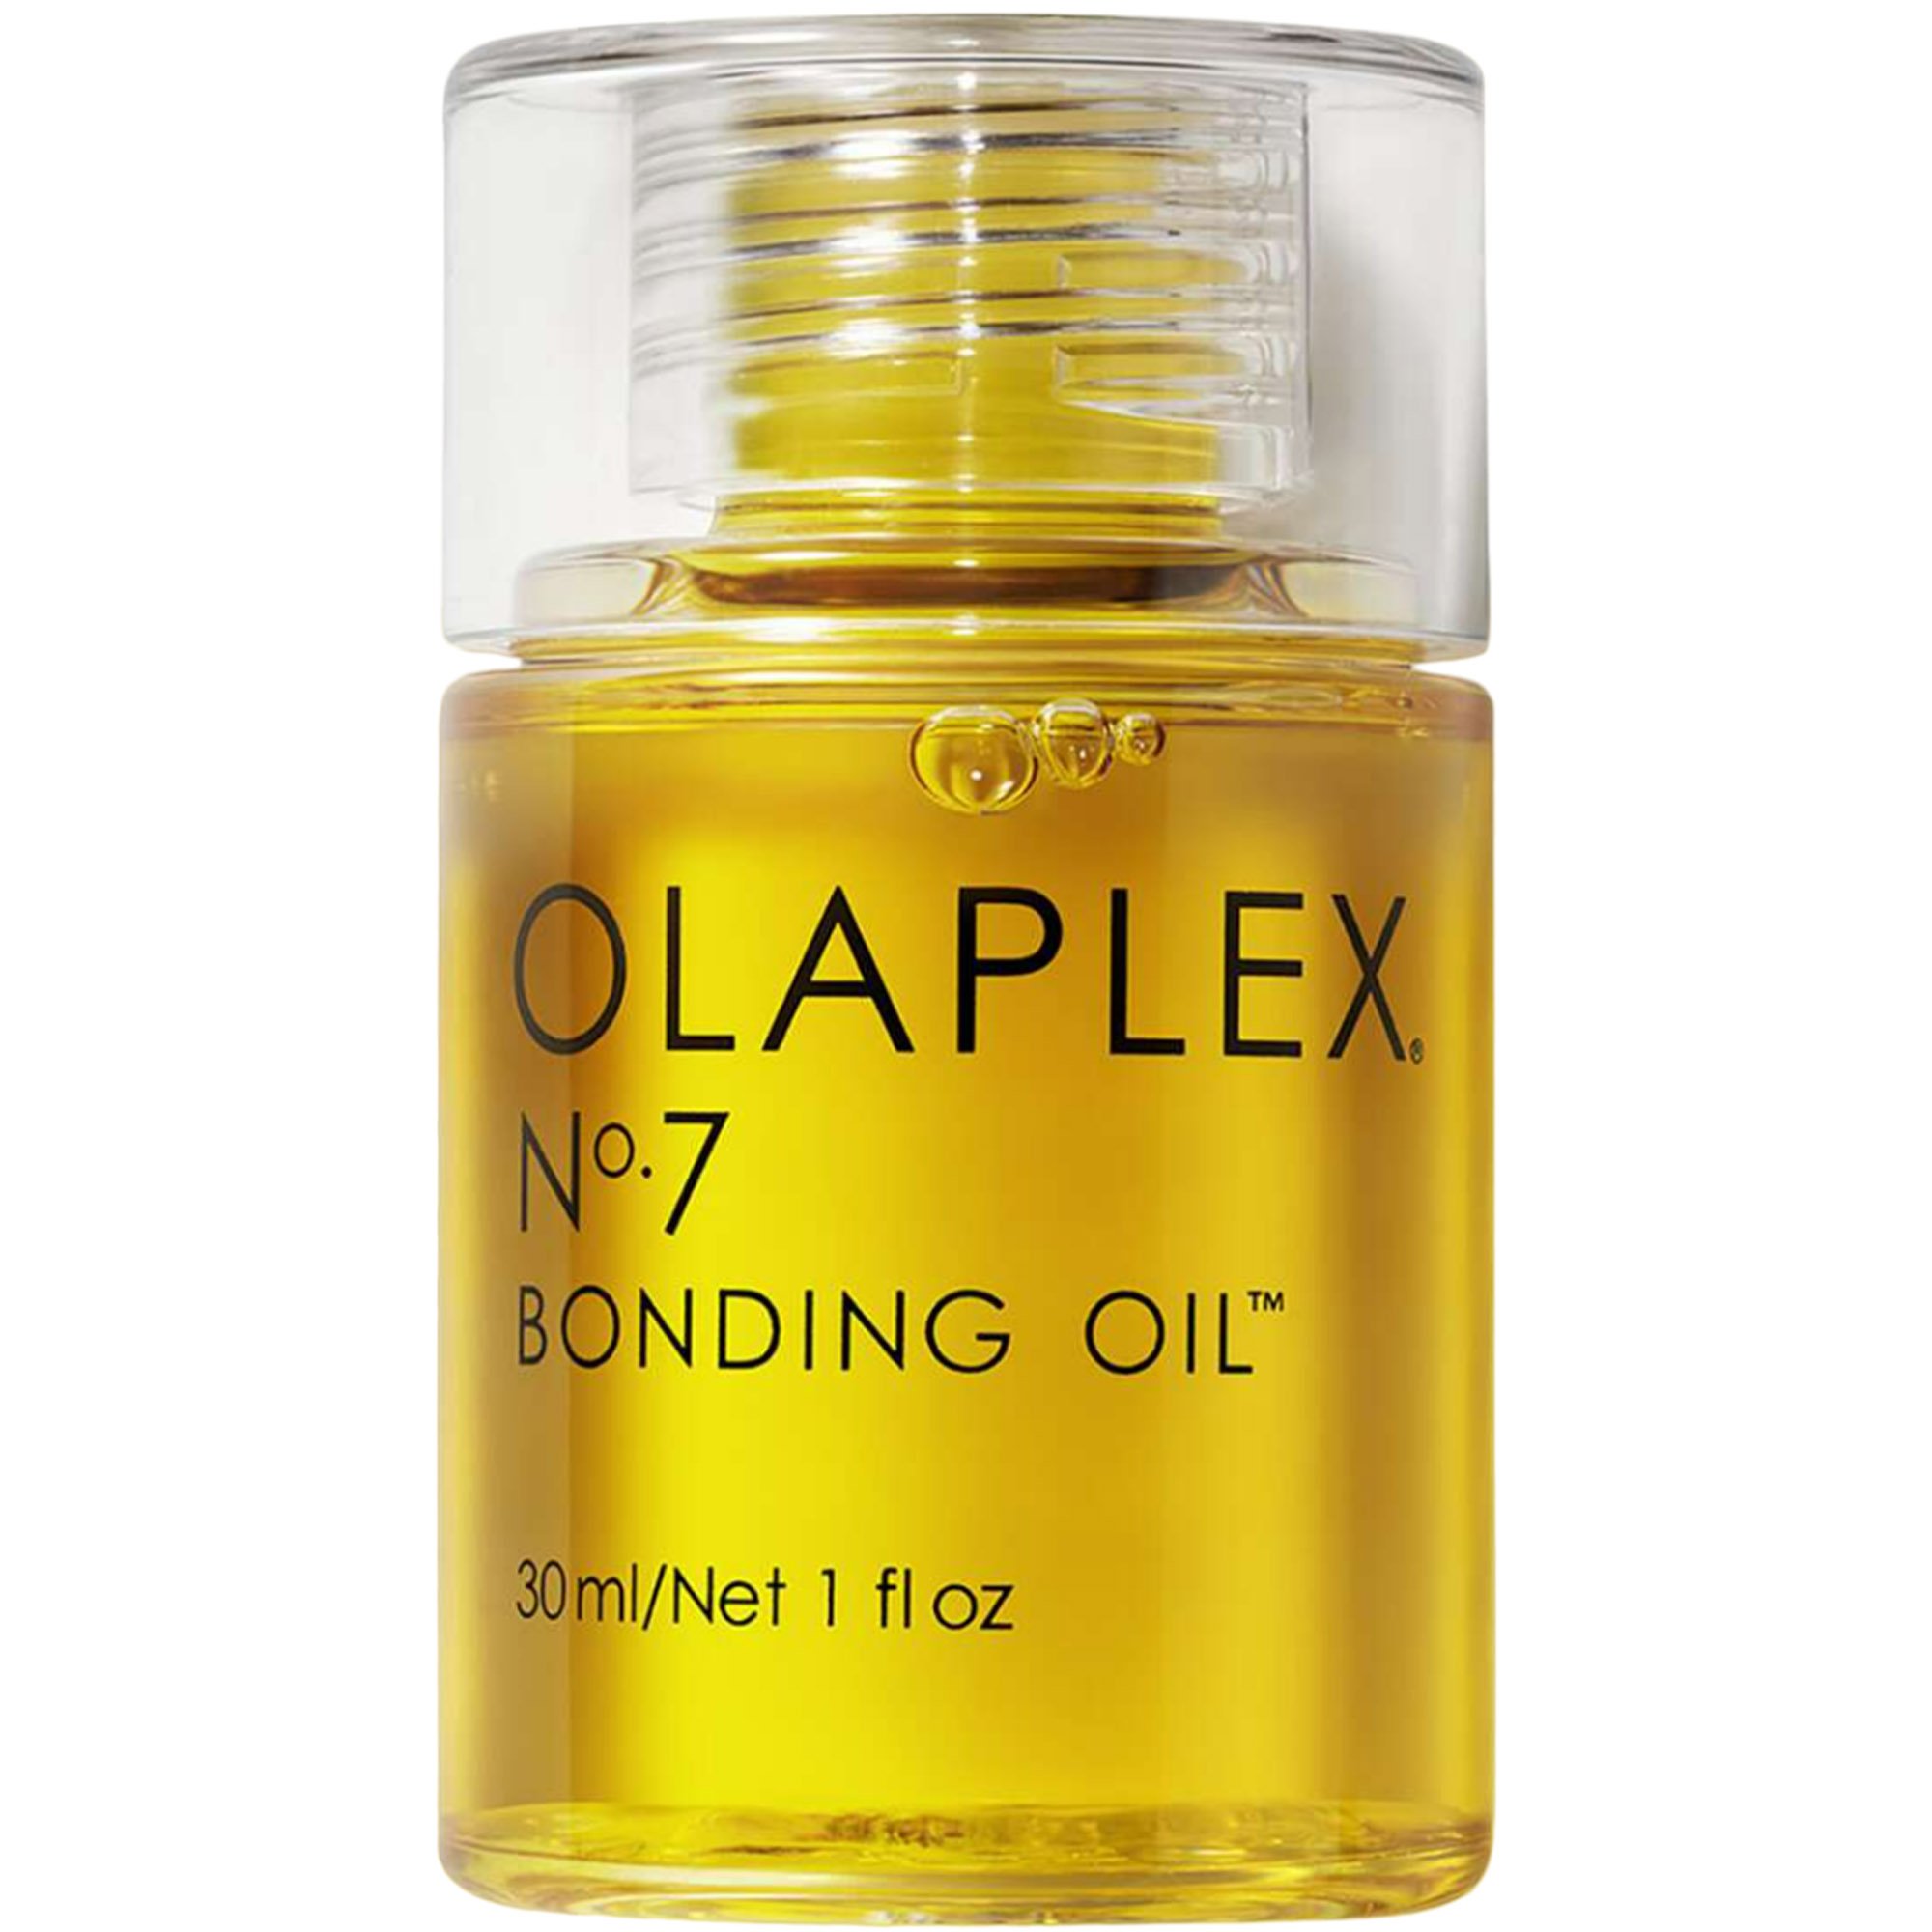 Восстанавливающее масло Olaplex Bonding Oil No.7 для укладки волос 30 мл - фото 1